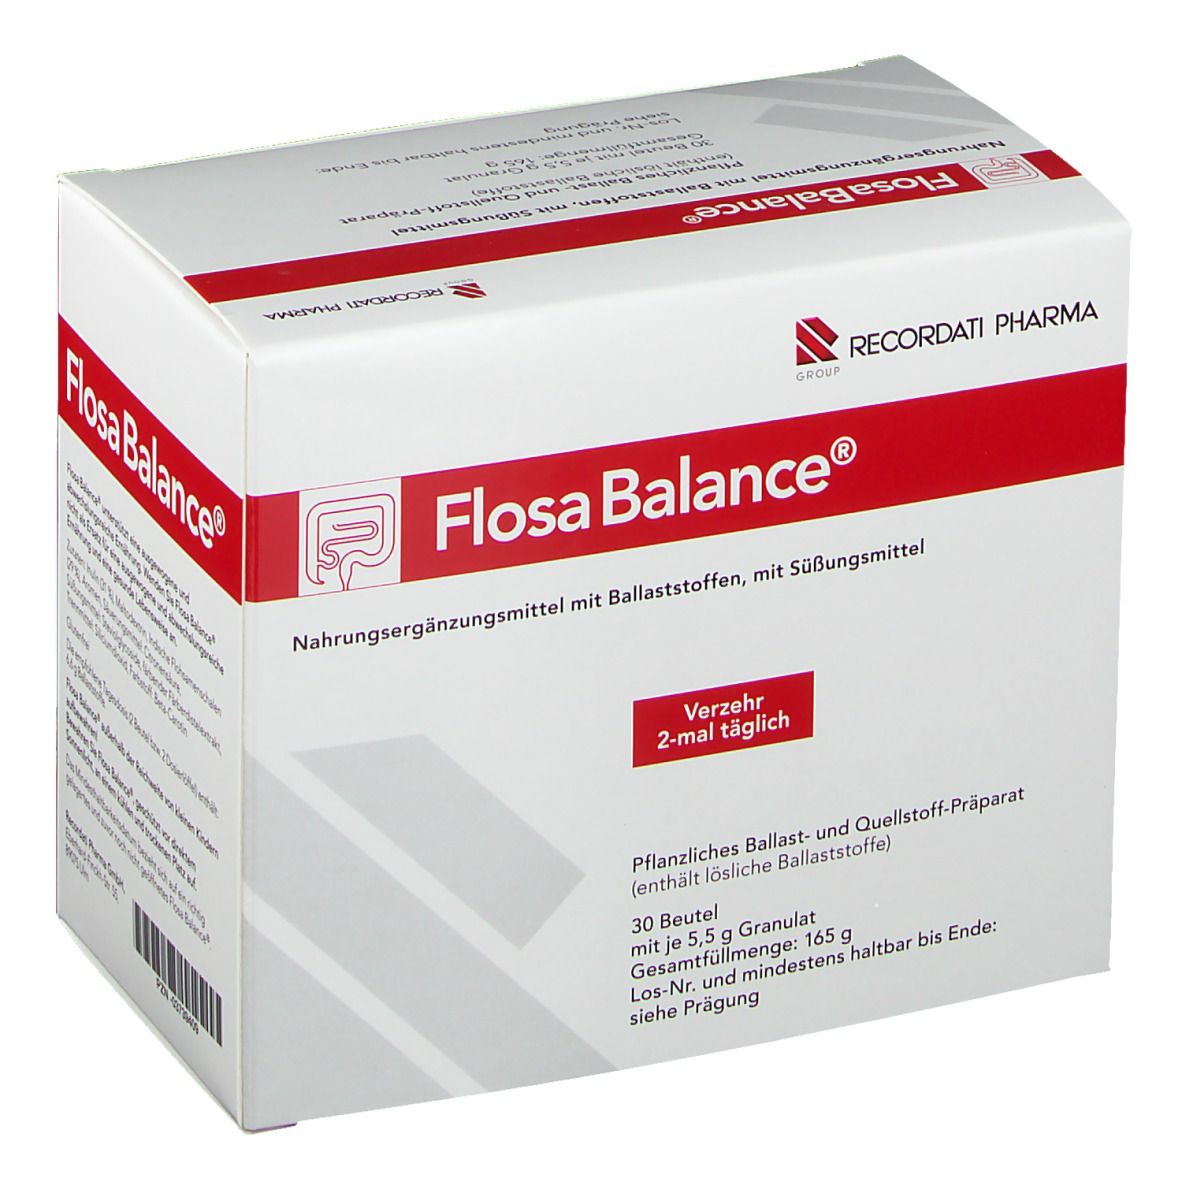 Flosa Balance® Granulat Beutel